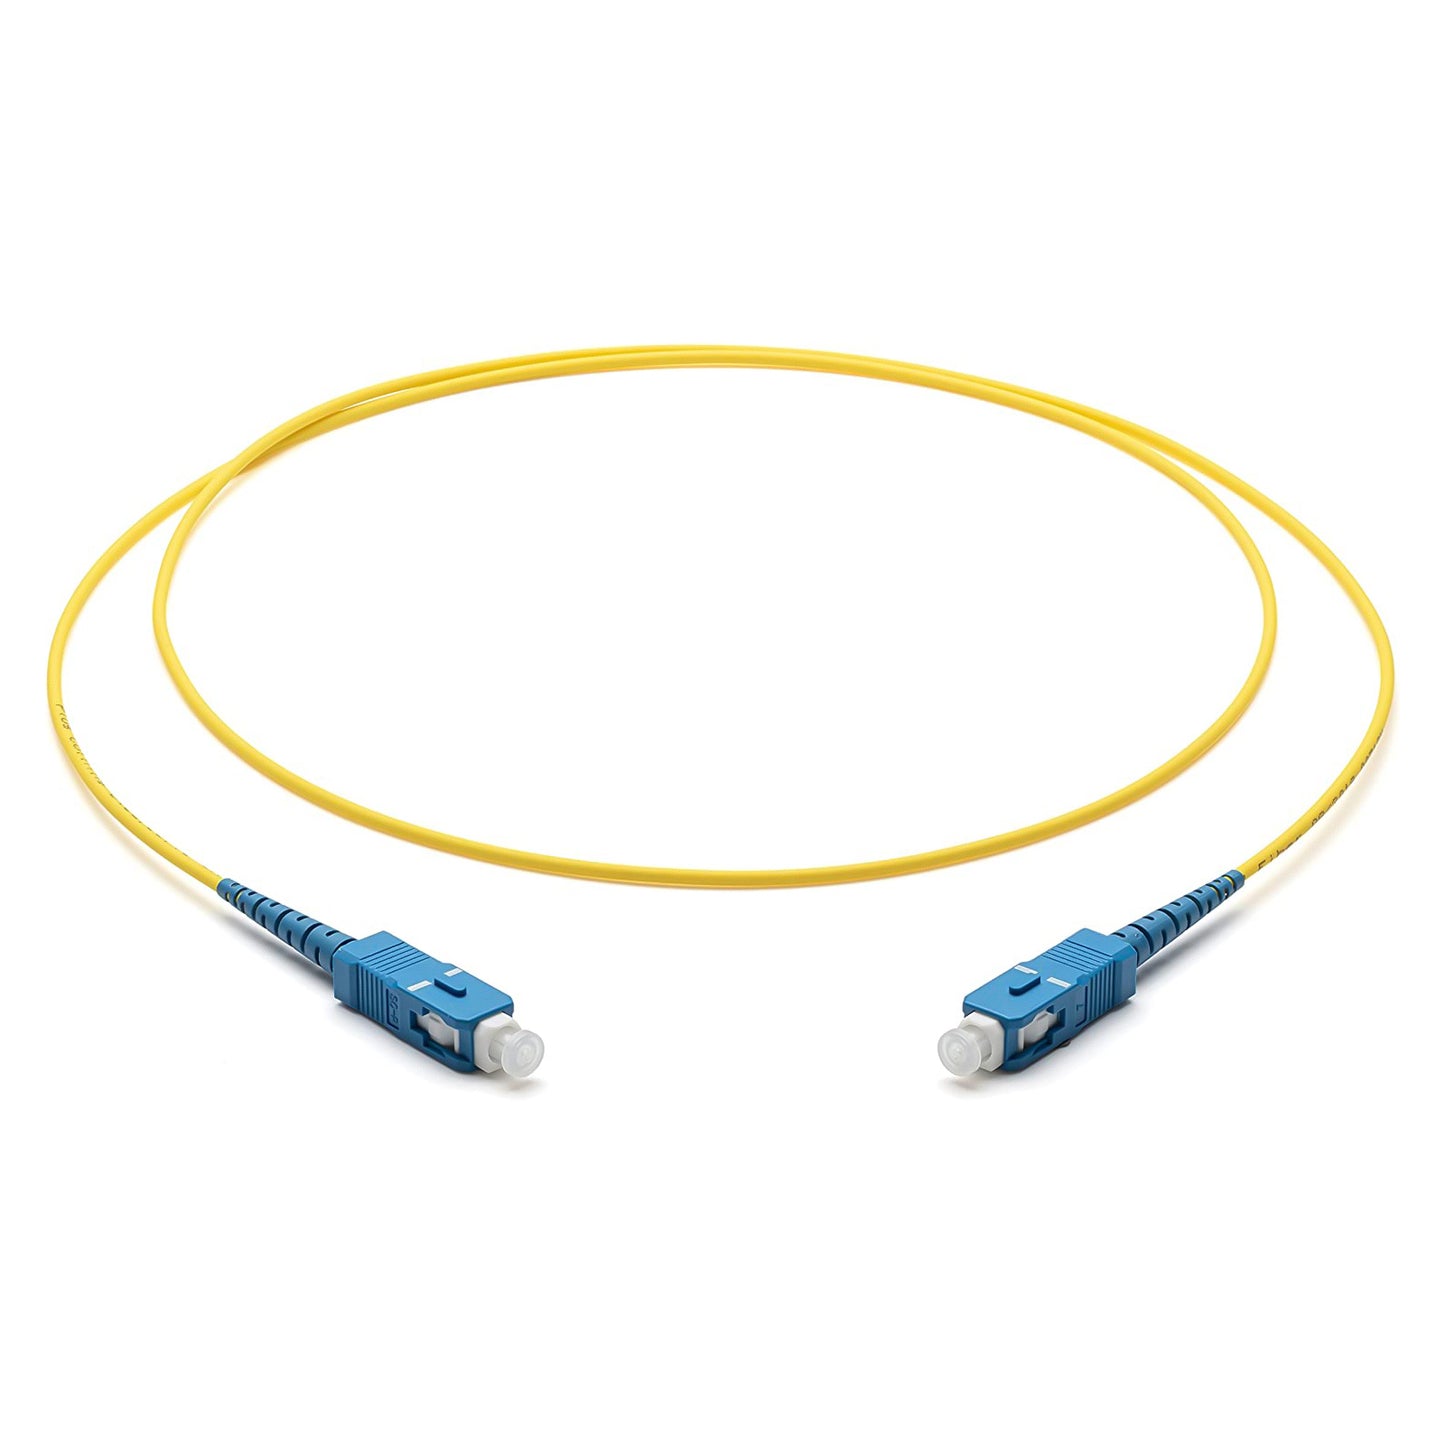 GBC 3m fiber optic patch cable, cable with SC/APC connectors, single mode simplex type, 9/125 micron fiber diameter